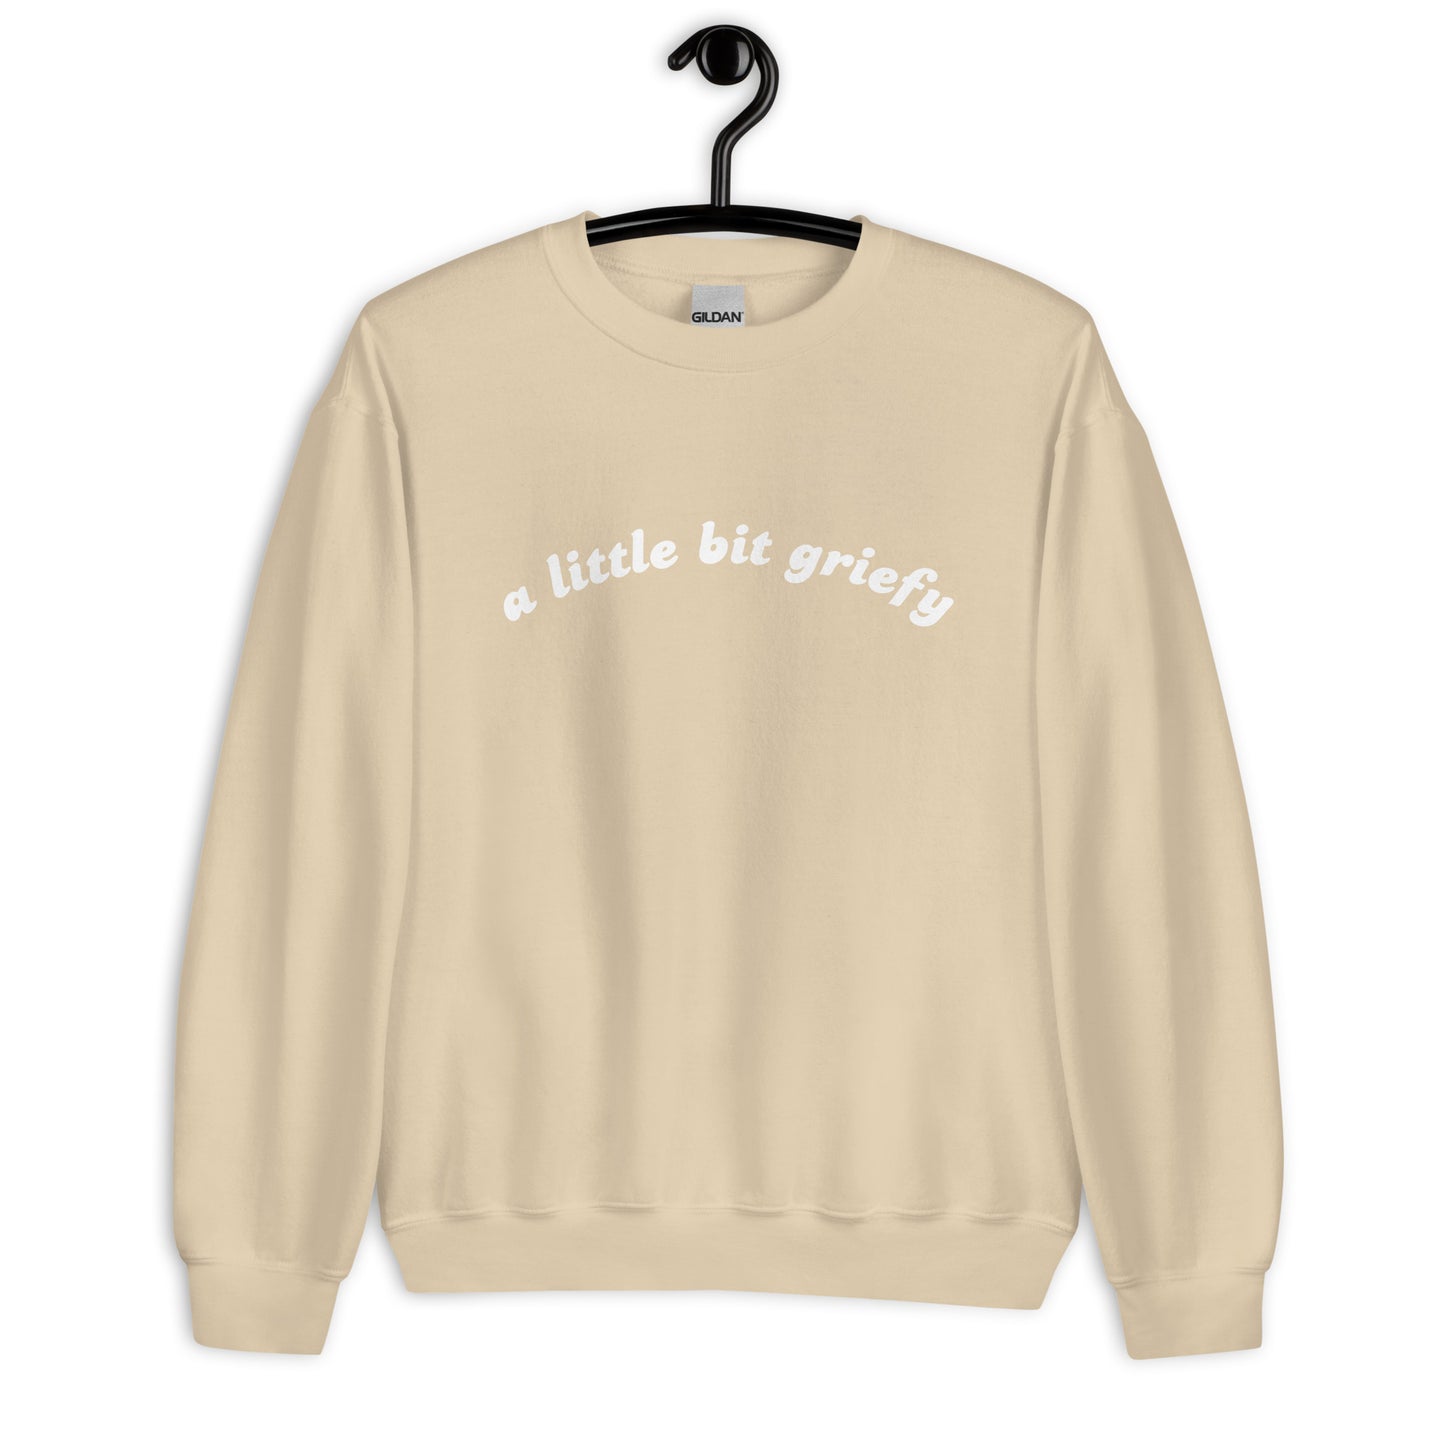 A little bit griefy Unisex Sweatshirt